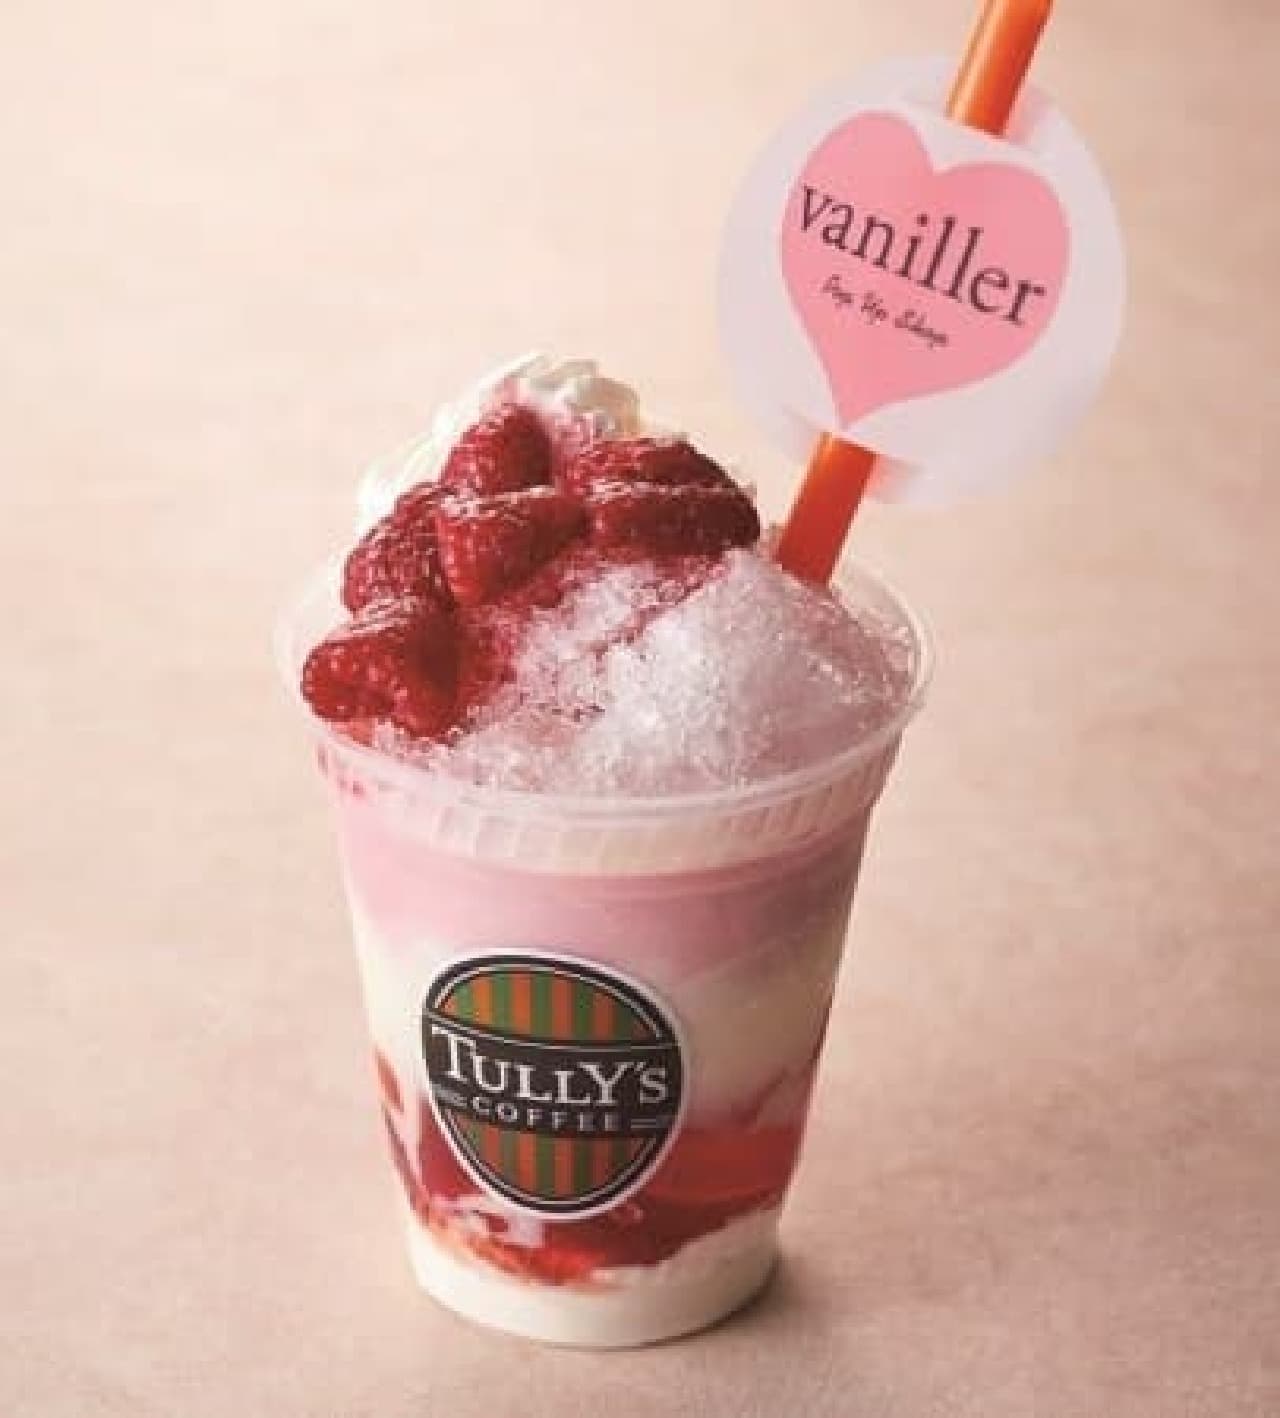 Tully's Coffee Ginza Mitsukoshi Community Store "Pink vaniller frozen"